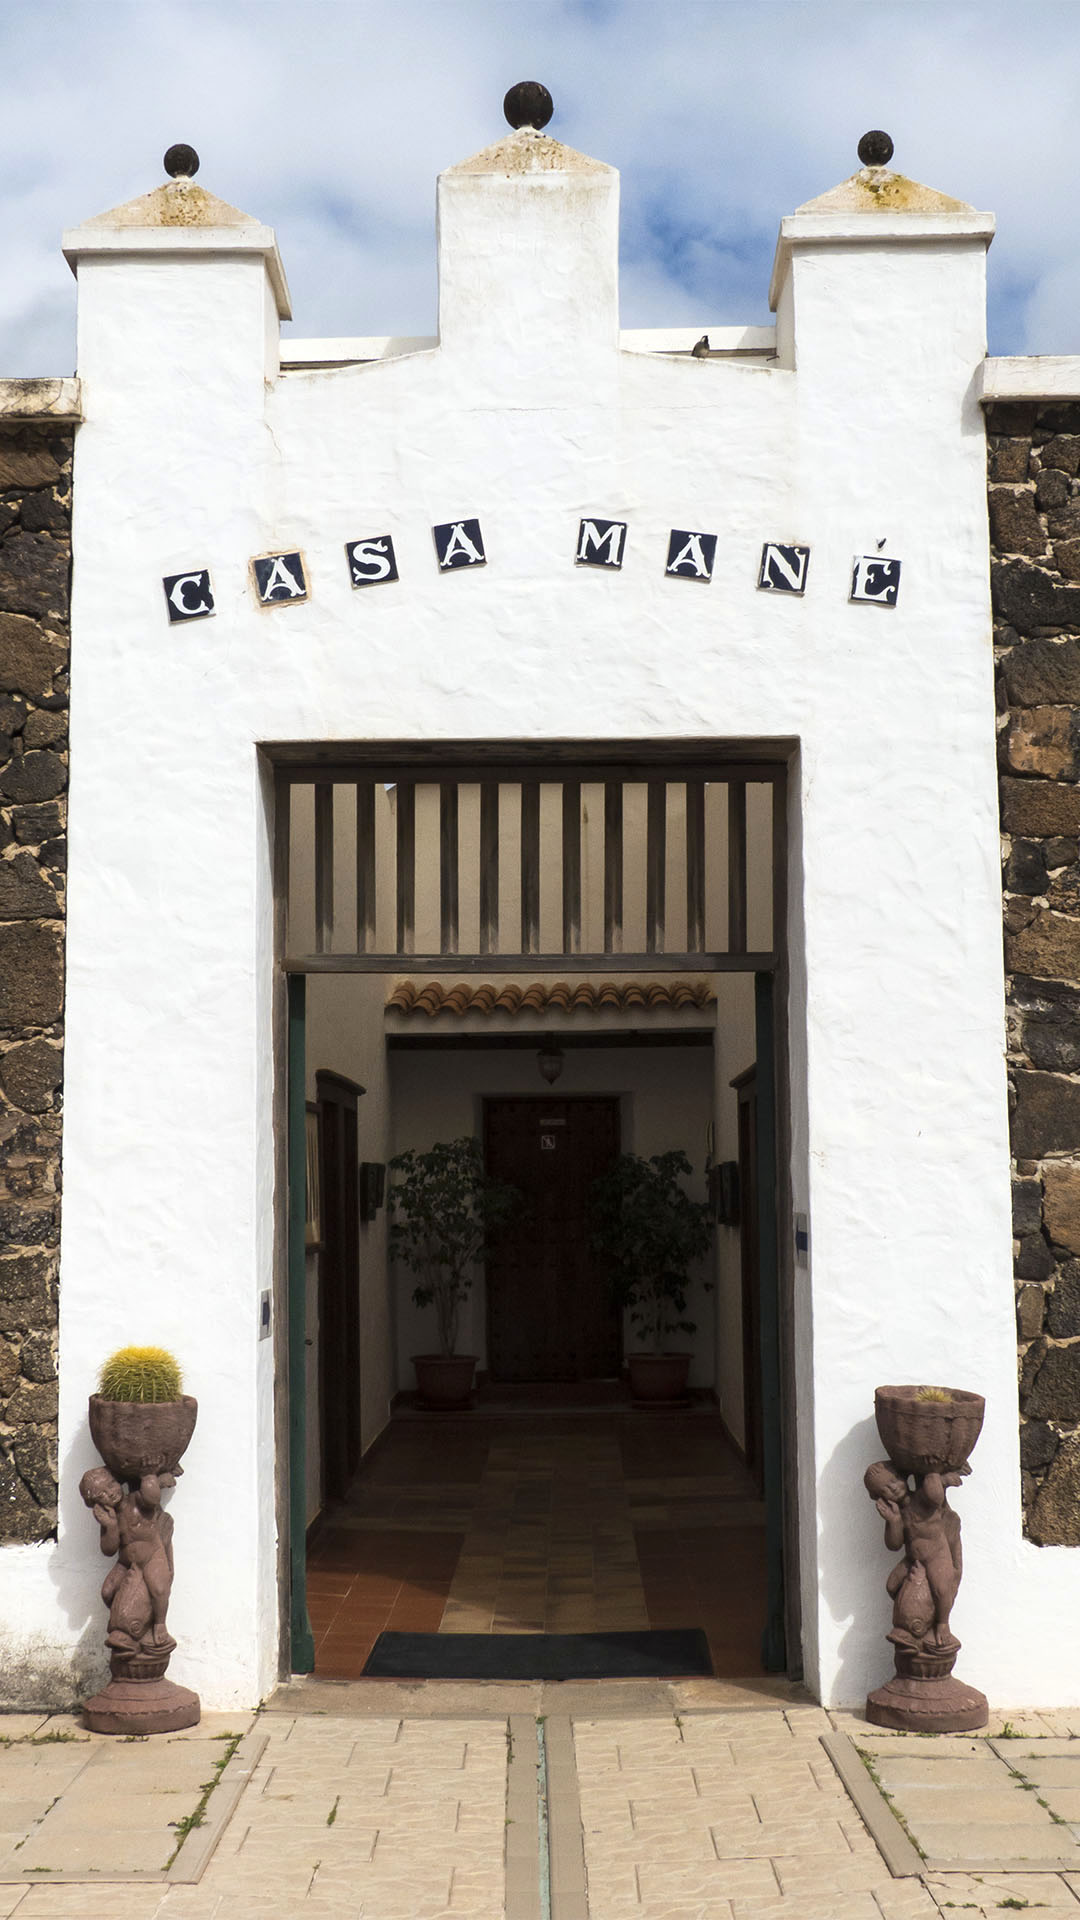 Sehenswürdigkeiten Fuerteventuras: La Oliva – Casa Mané